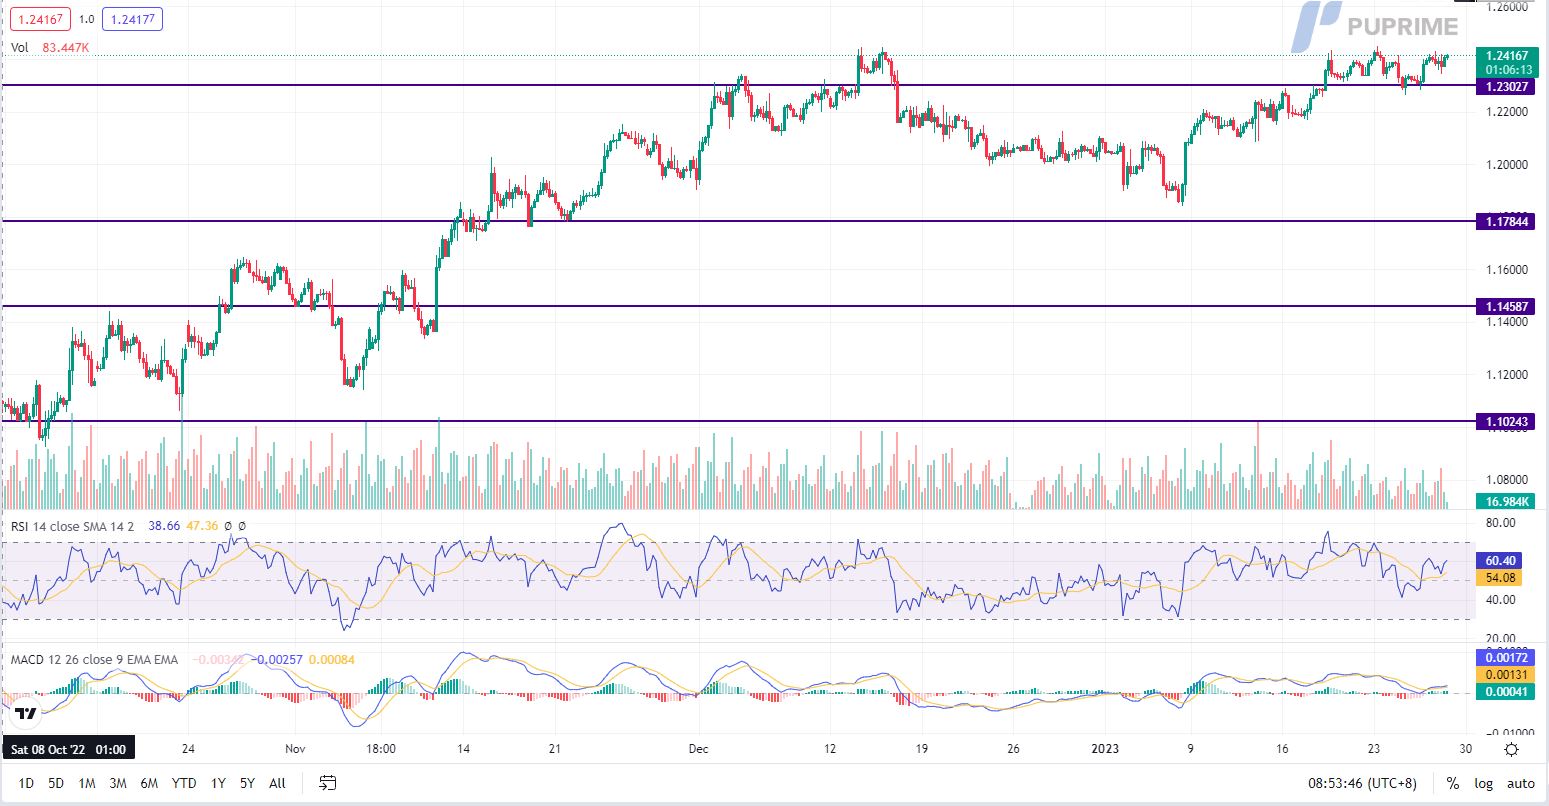 GBP/USD price chart 27 january 2023